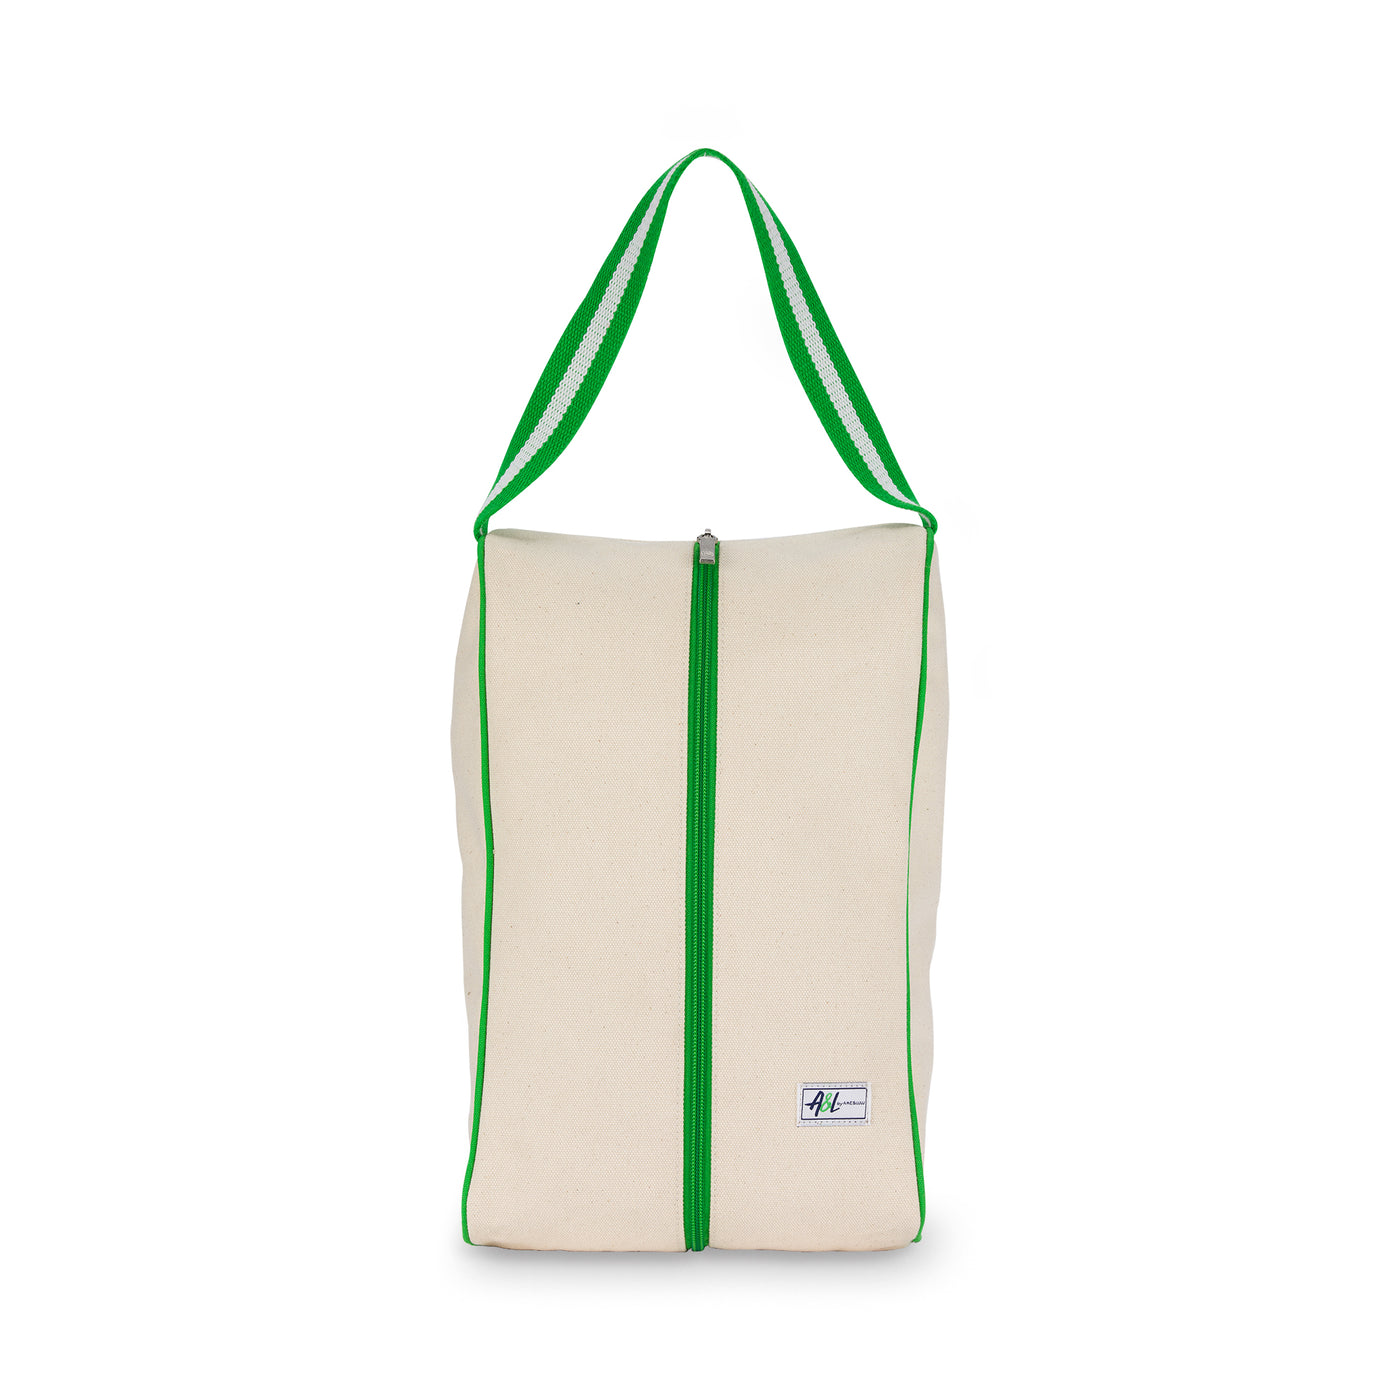 rectangular tan canvas shoe bag with lime green handles.